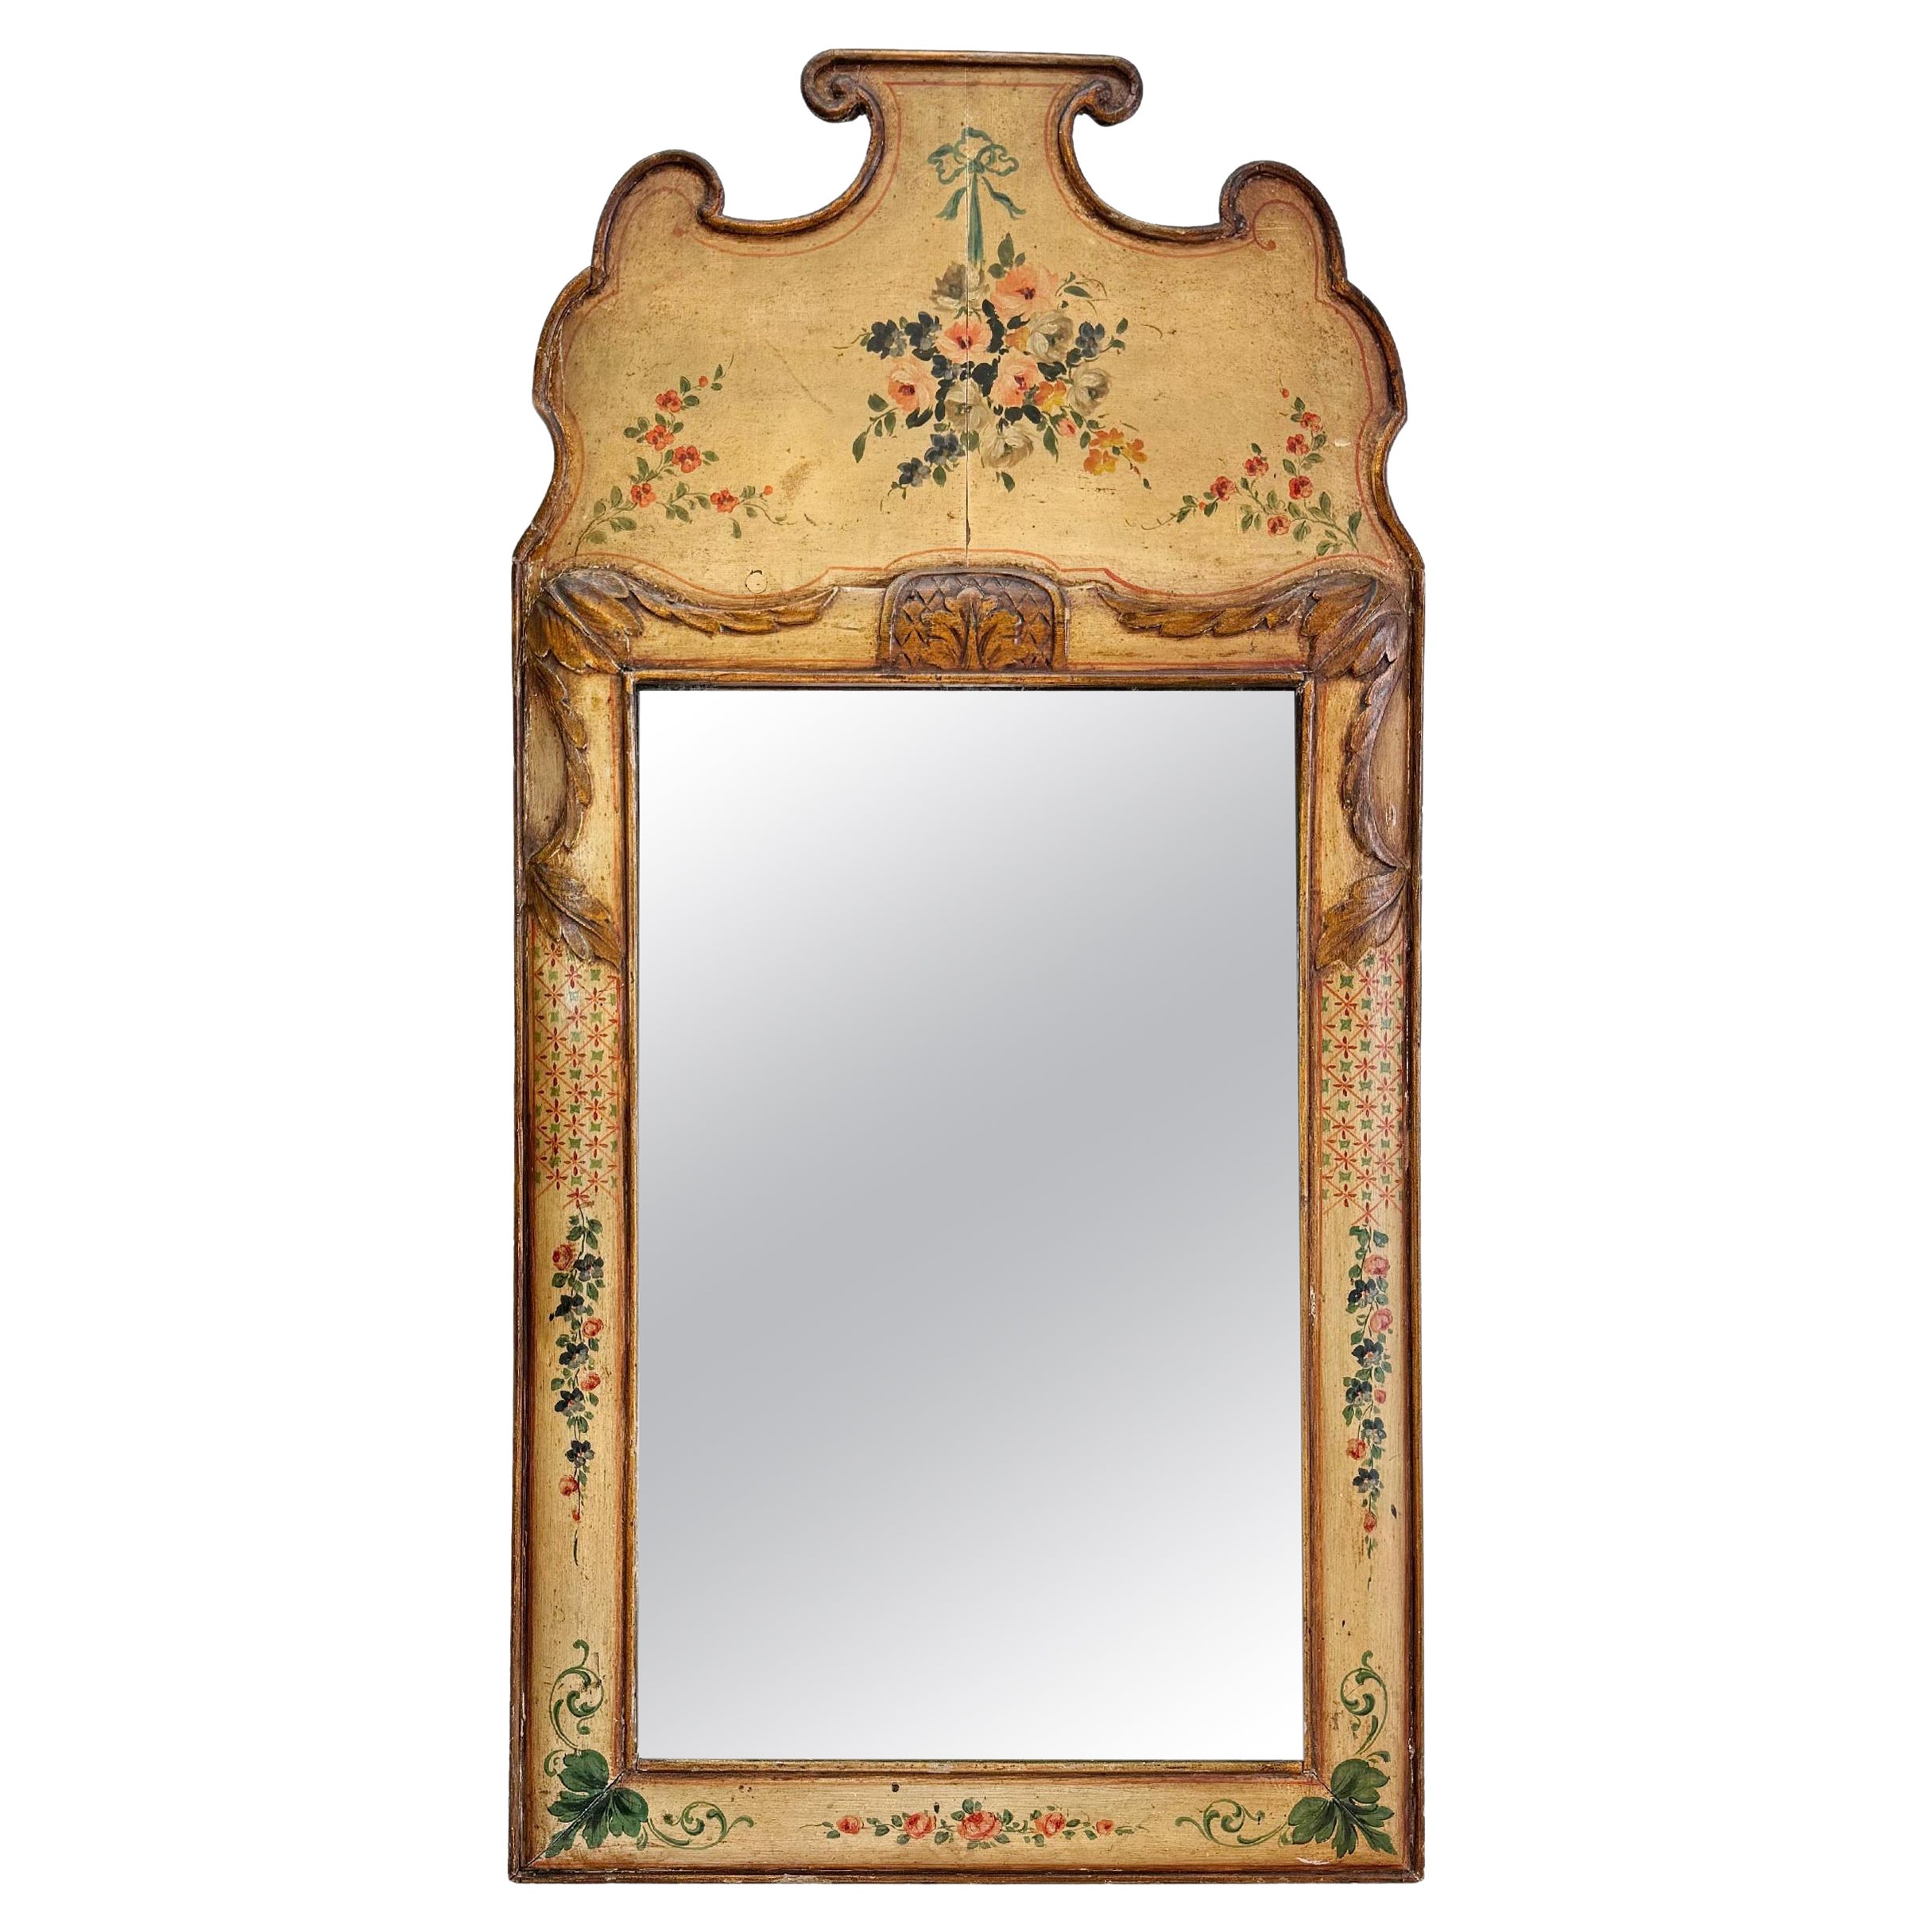 18th Century Queen Anne Style Floral Mirror